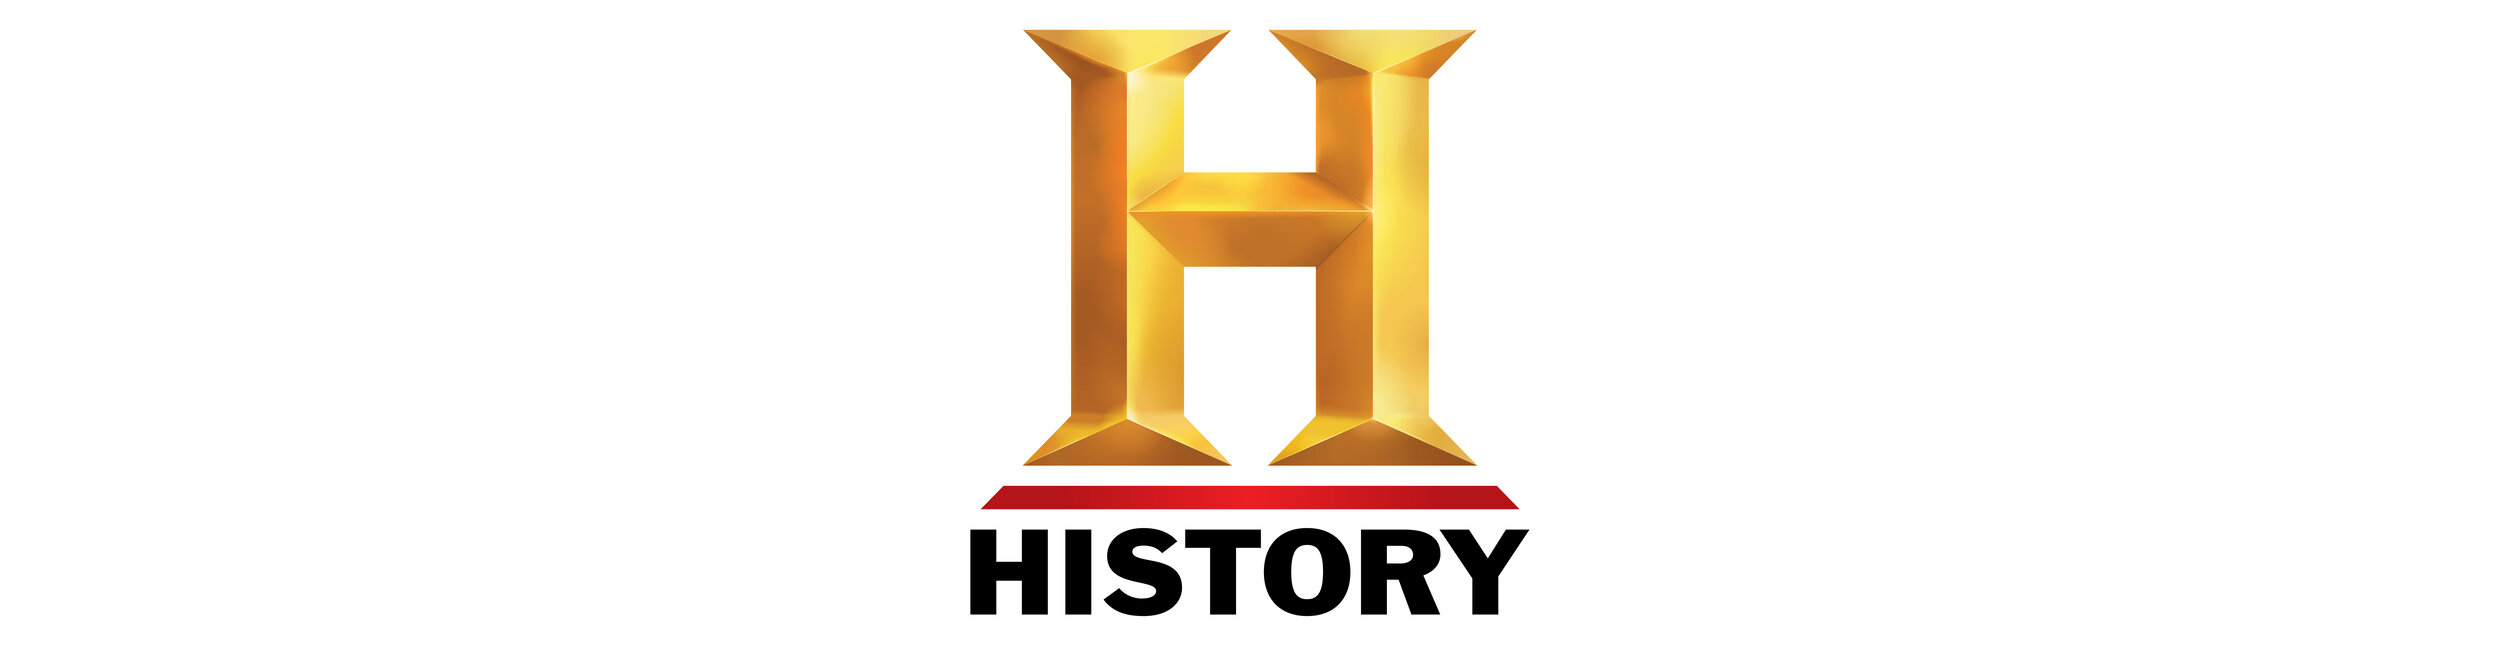 History_Logo_Lungo-01.jpg